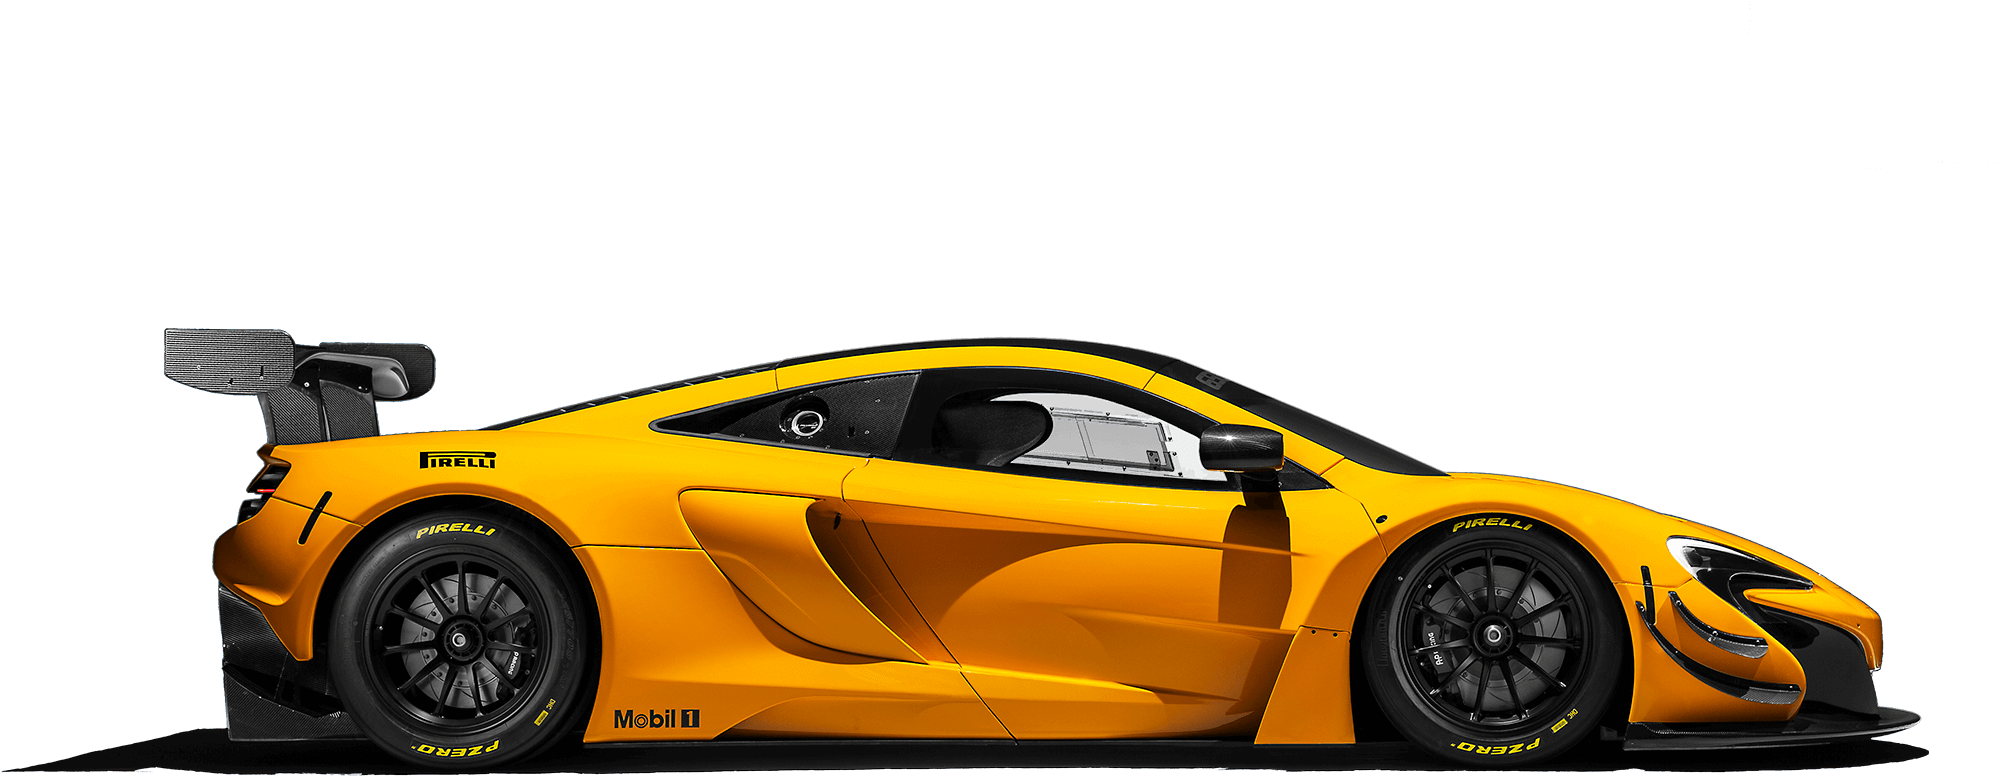 McLaren 650S PNG HD Quality